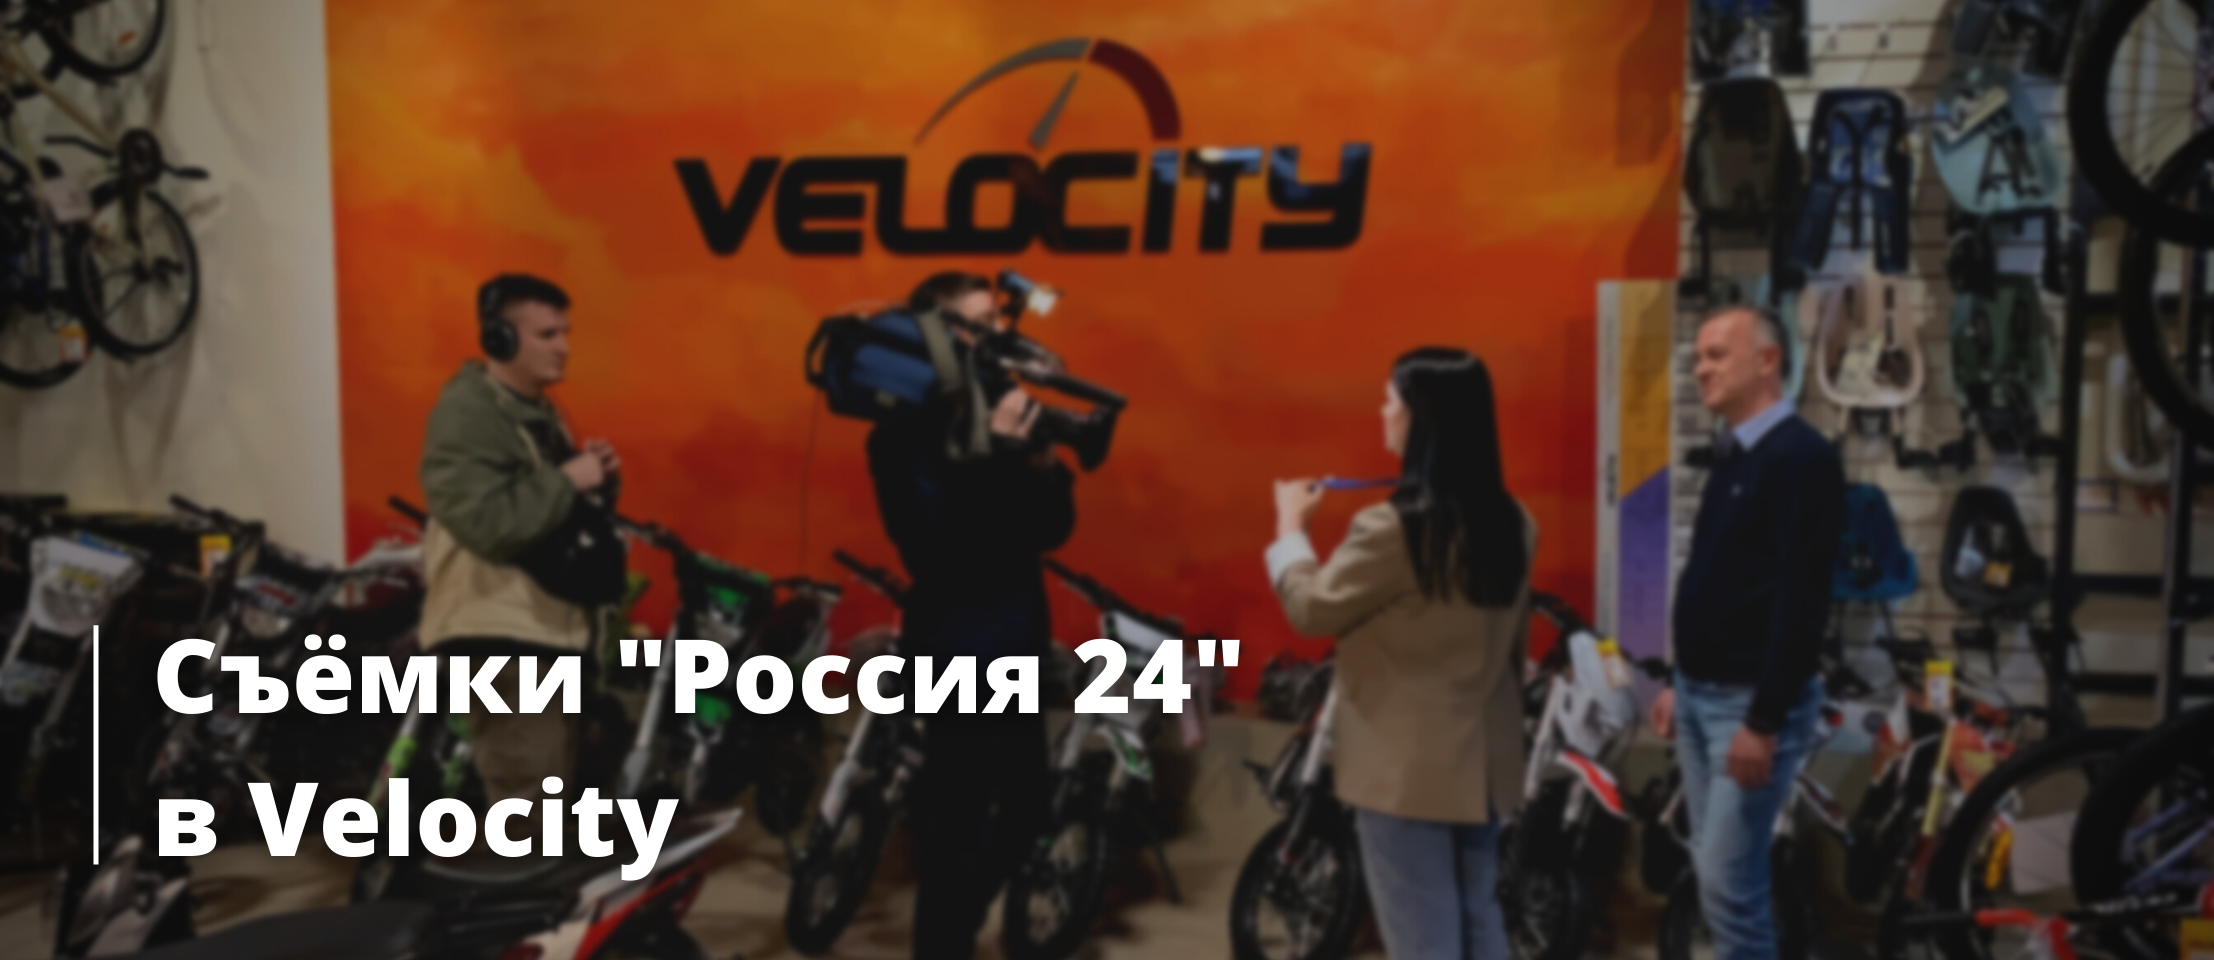 Съёмки "Россия 24" в Velocity